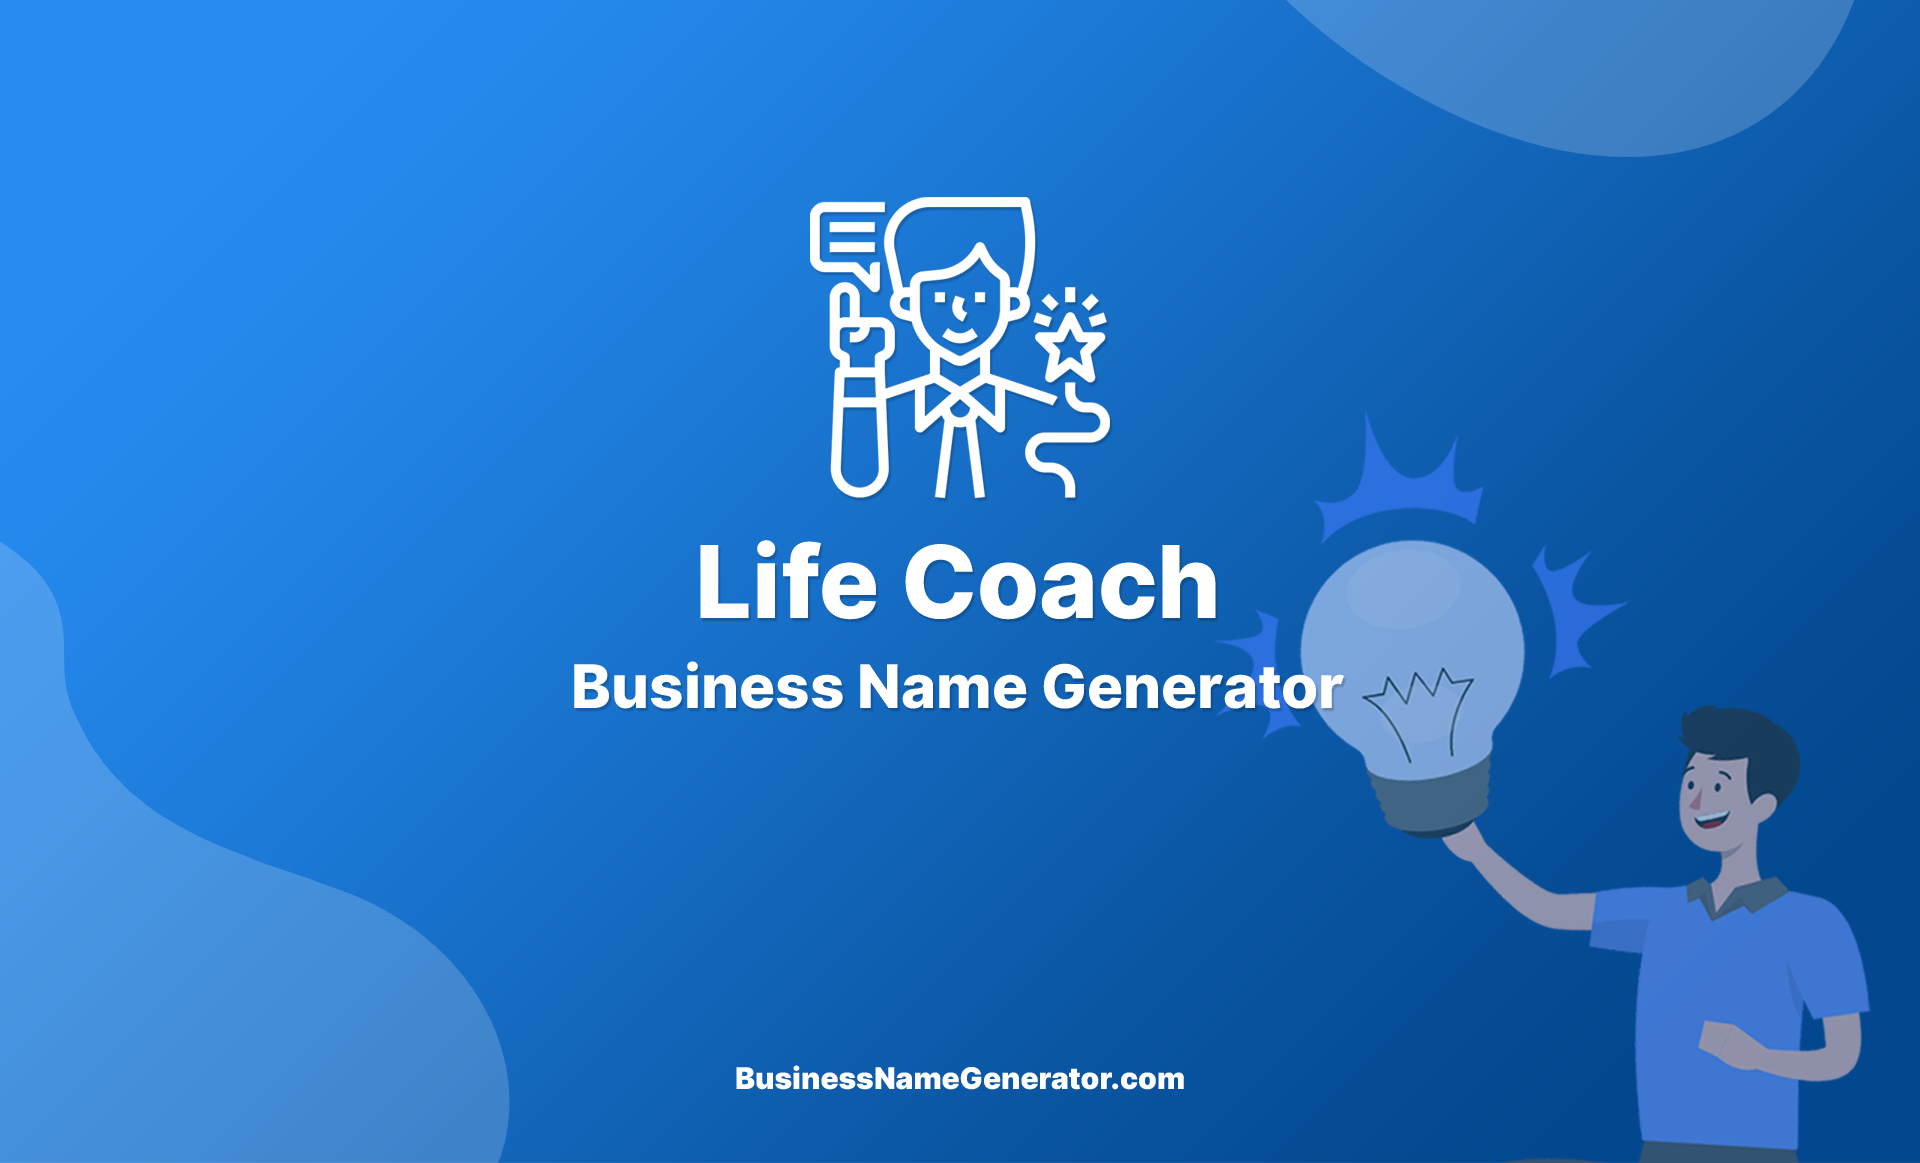 Life Coach Business Name Generator